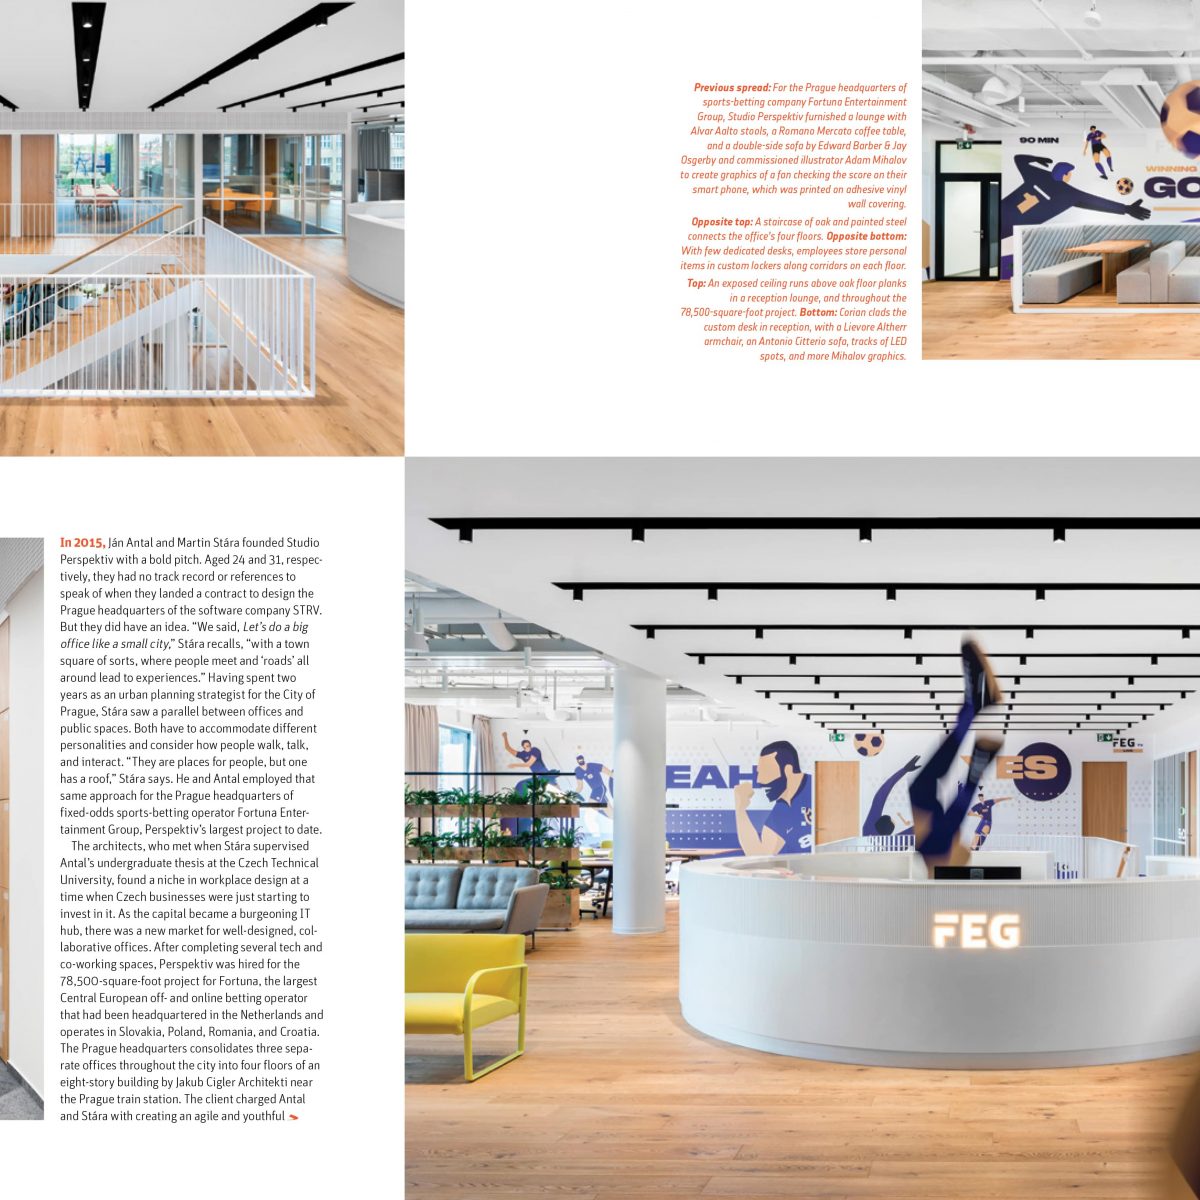 Kanceláře Fortuna Entertainment Group v magazine Interior Design